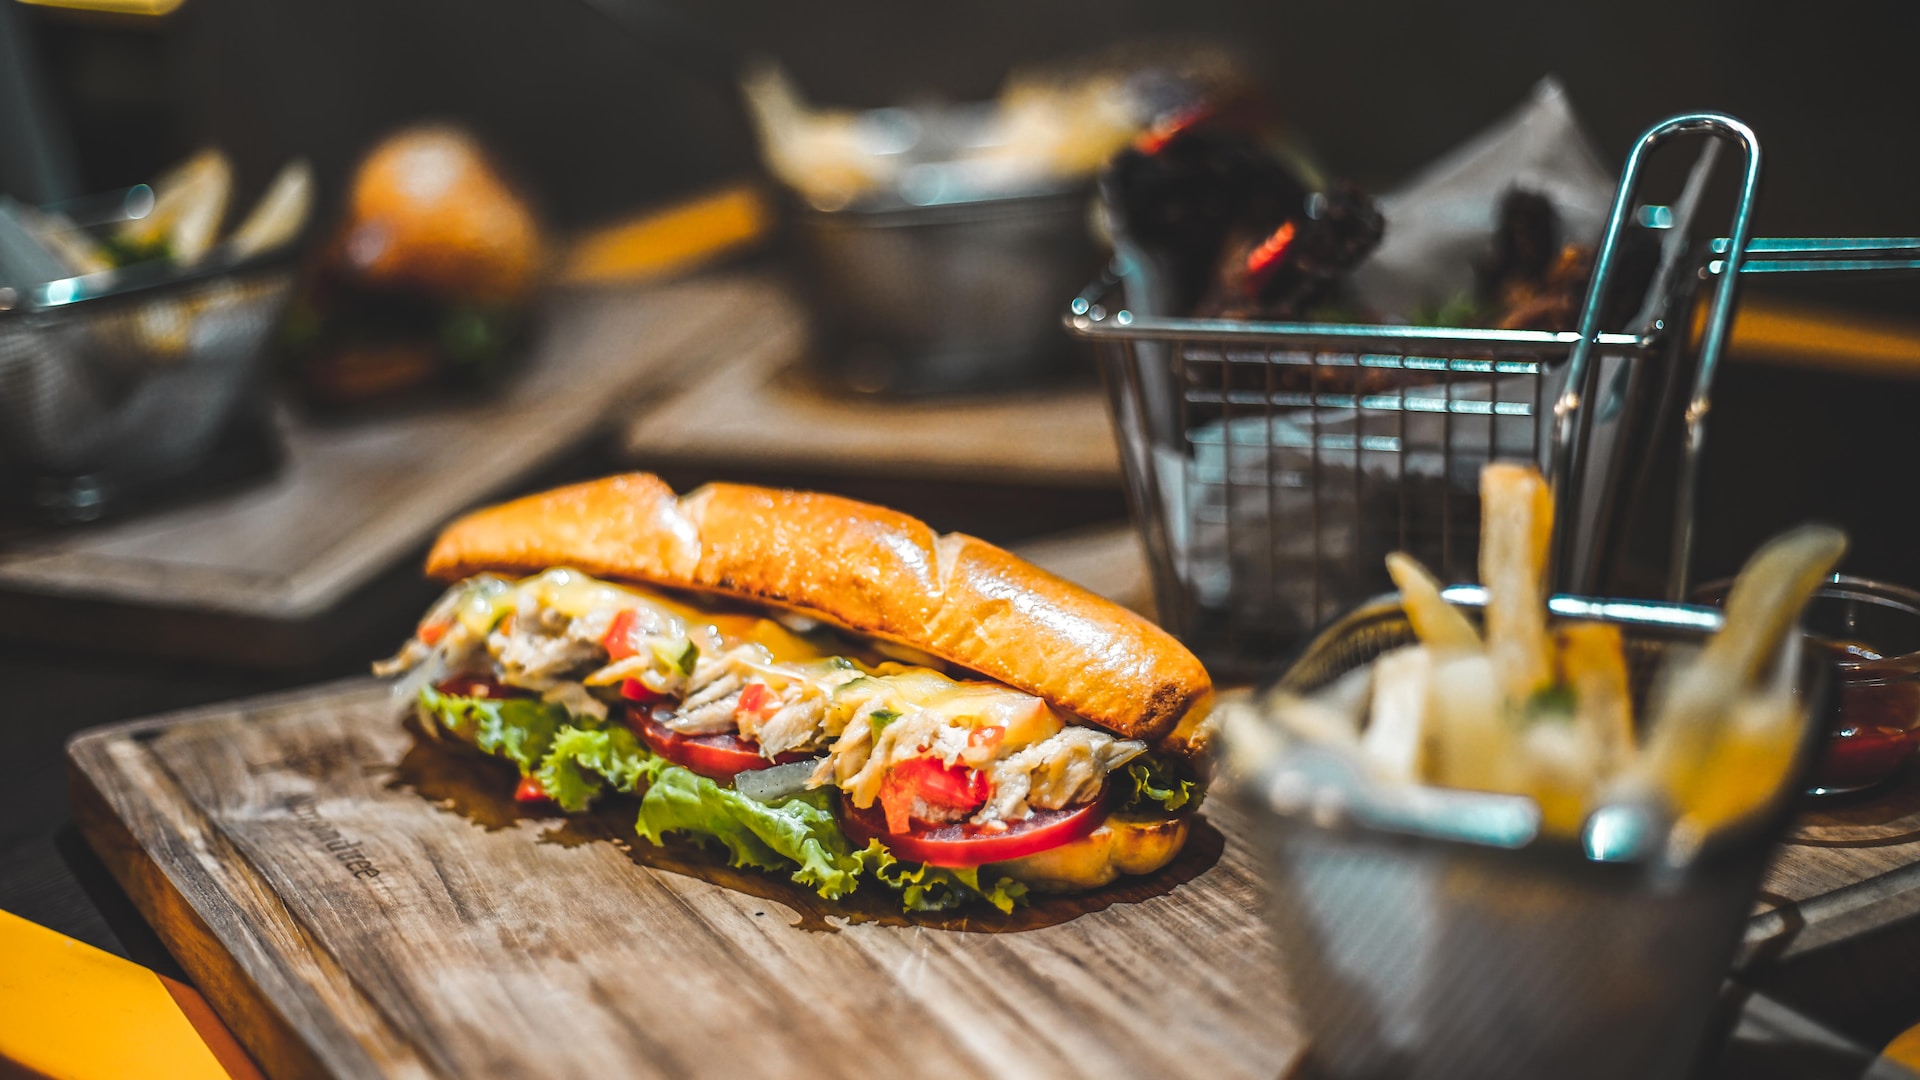 Life Bistro’s Vegan Philly: A Meatless Twist on a Classic Philadelphia Sandwich